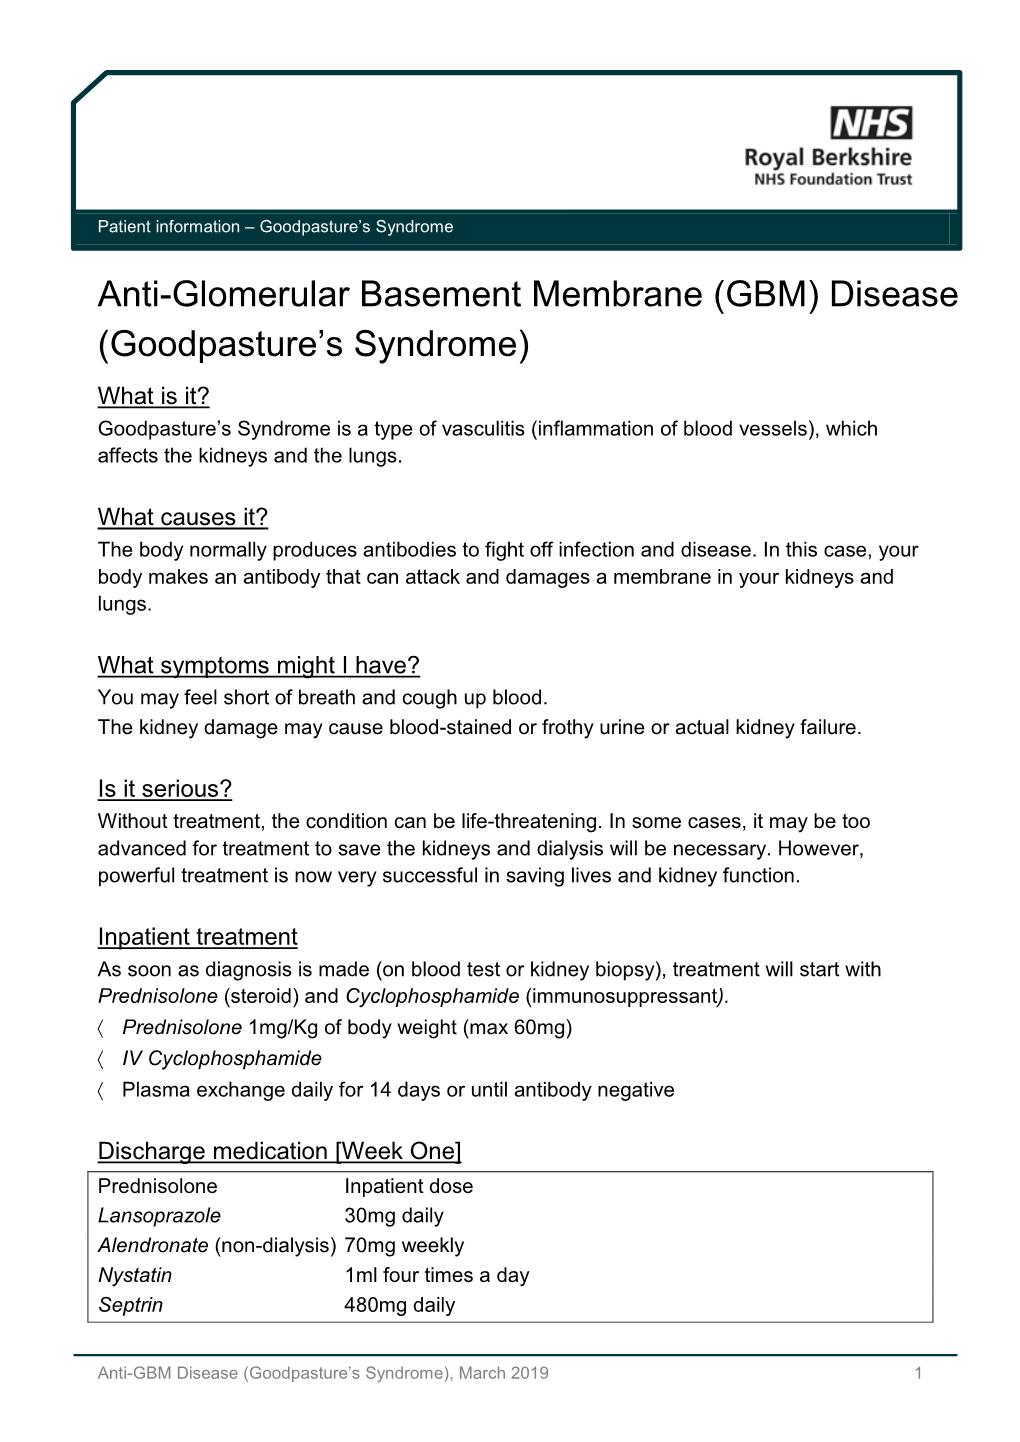 Anti-Glomerular Basement Membrane (GBM) Disease (Goodpasture's Syndrome)